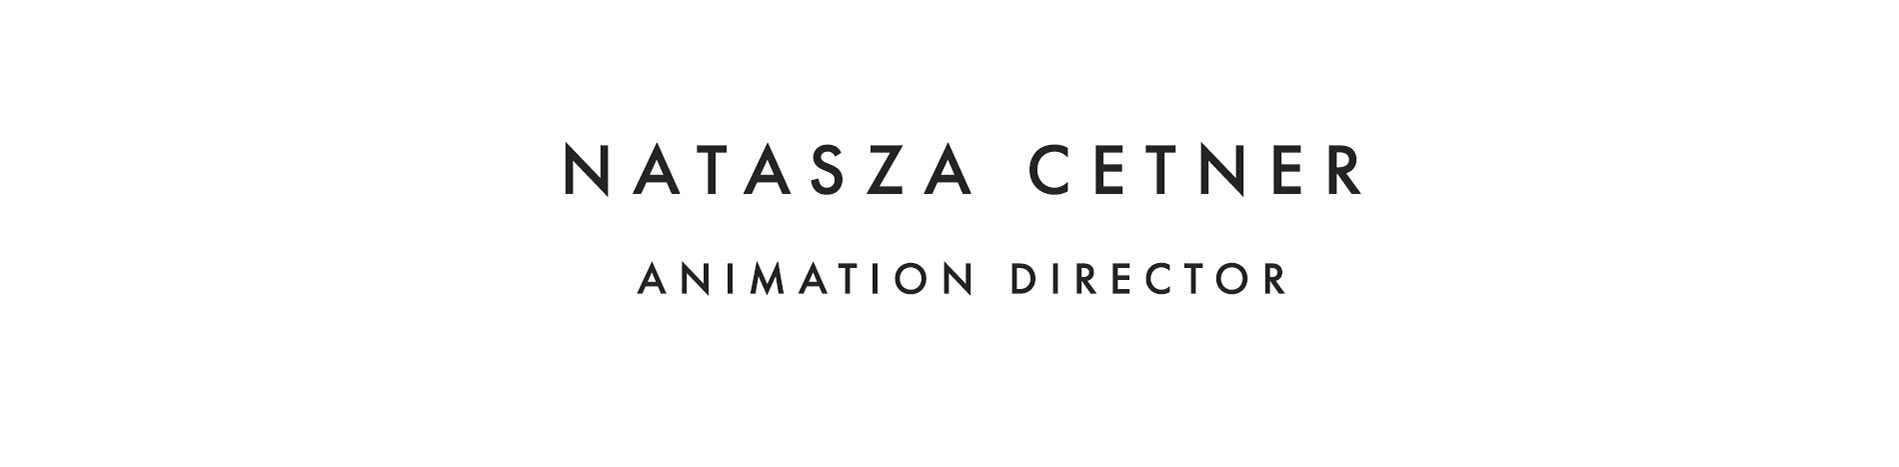 Natasza Cetner - Animation Director - Scale (2021)